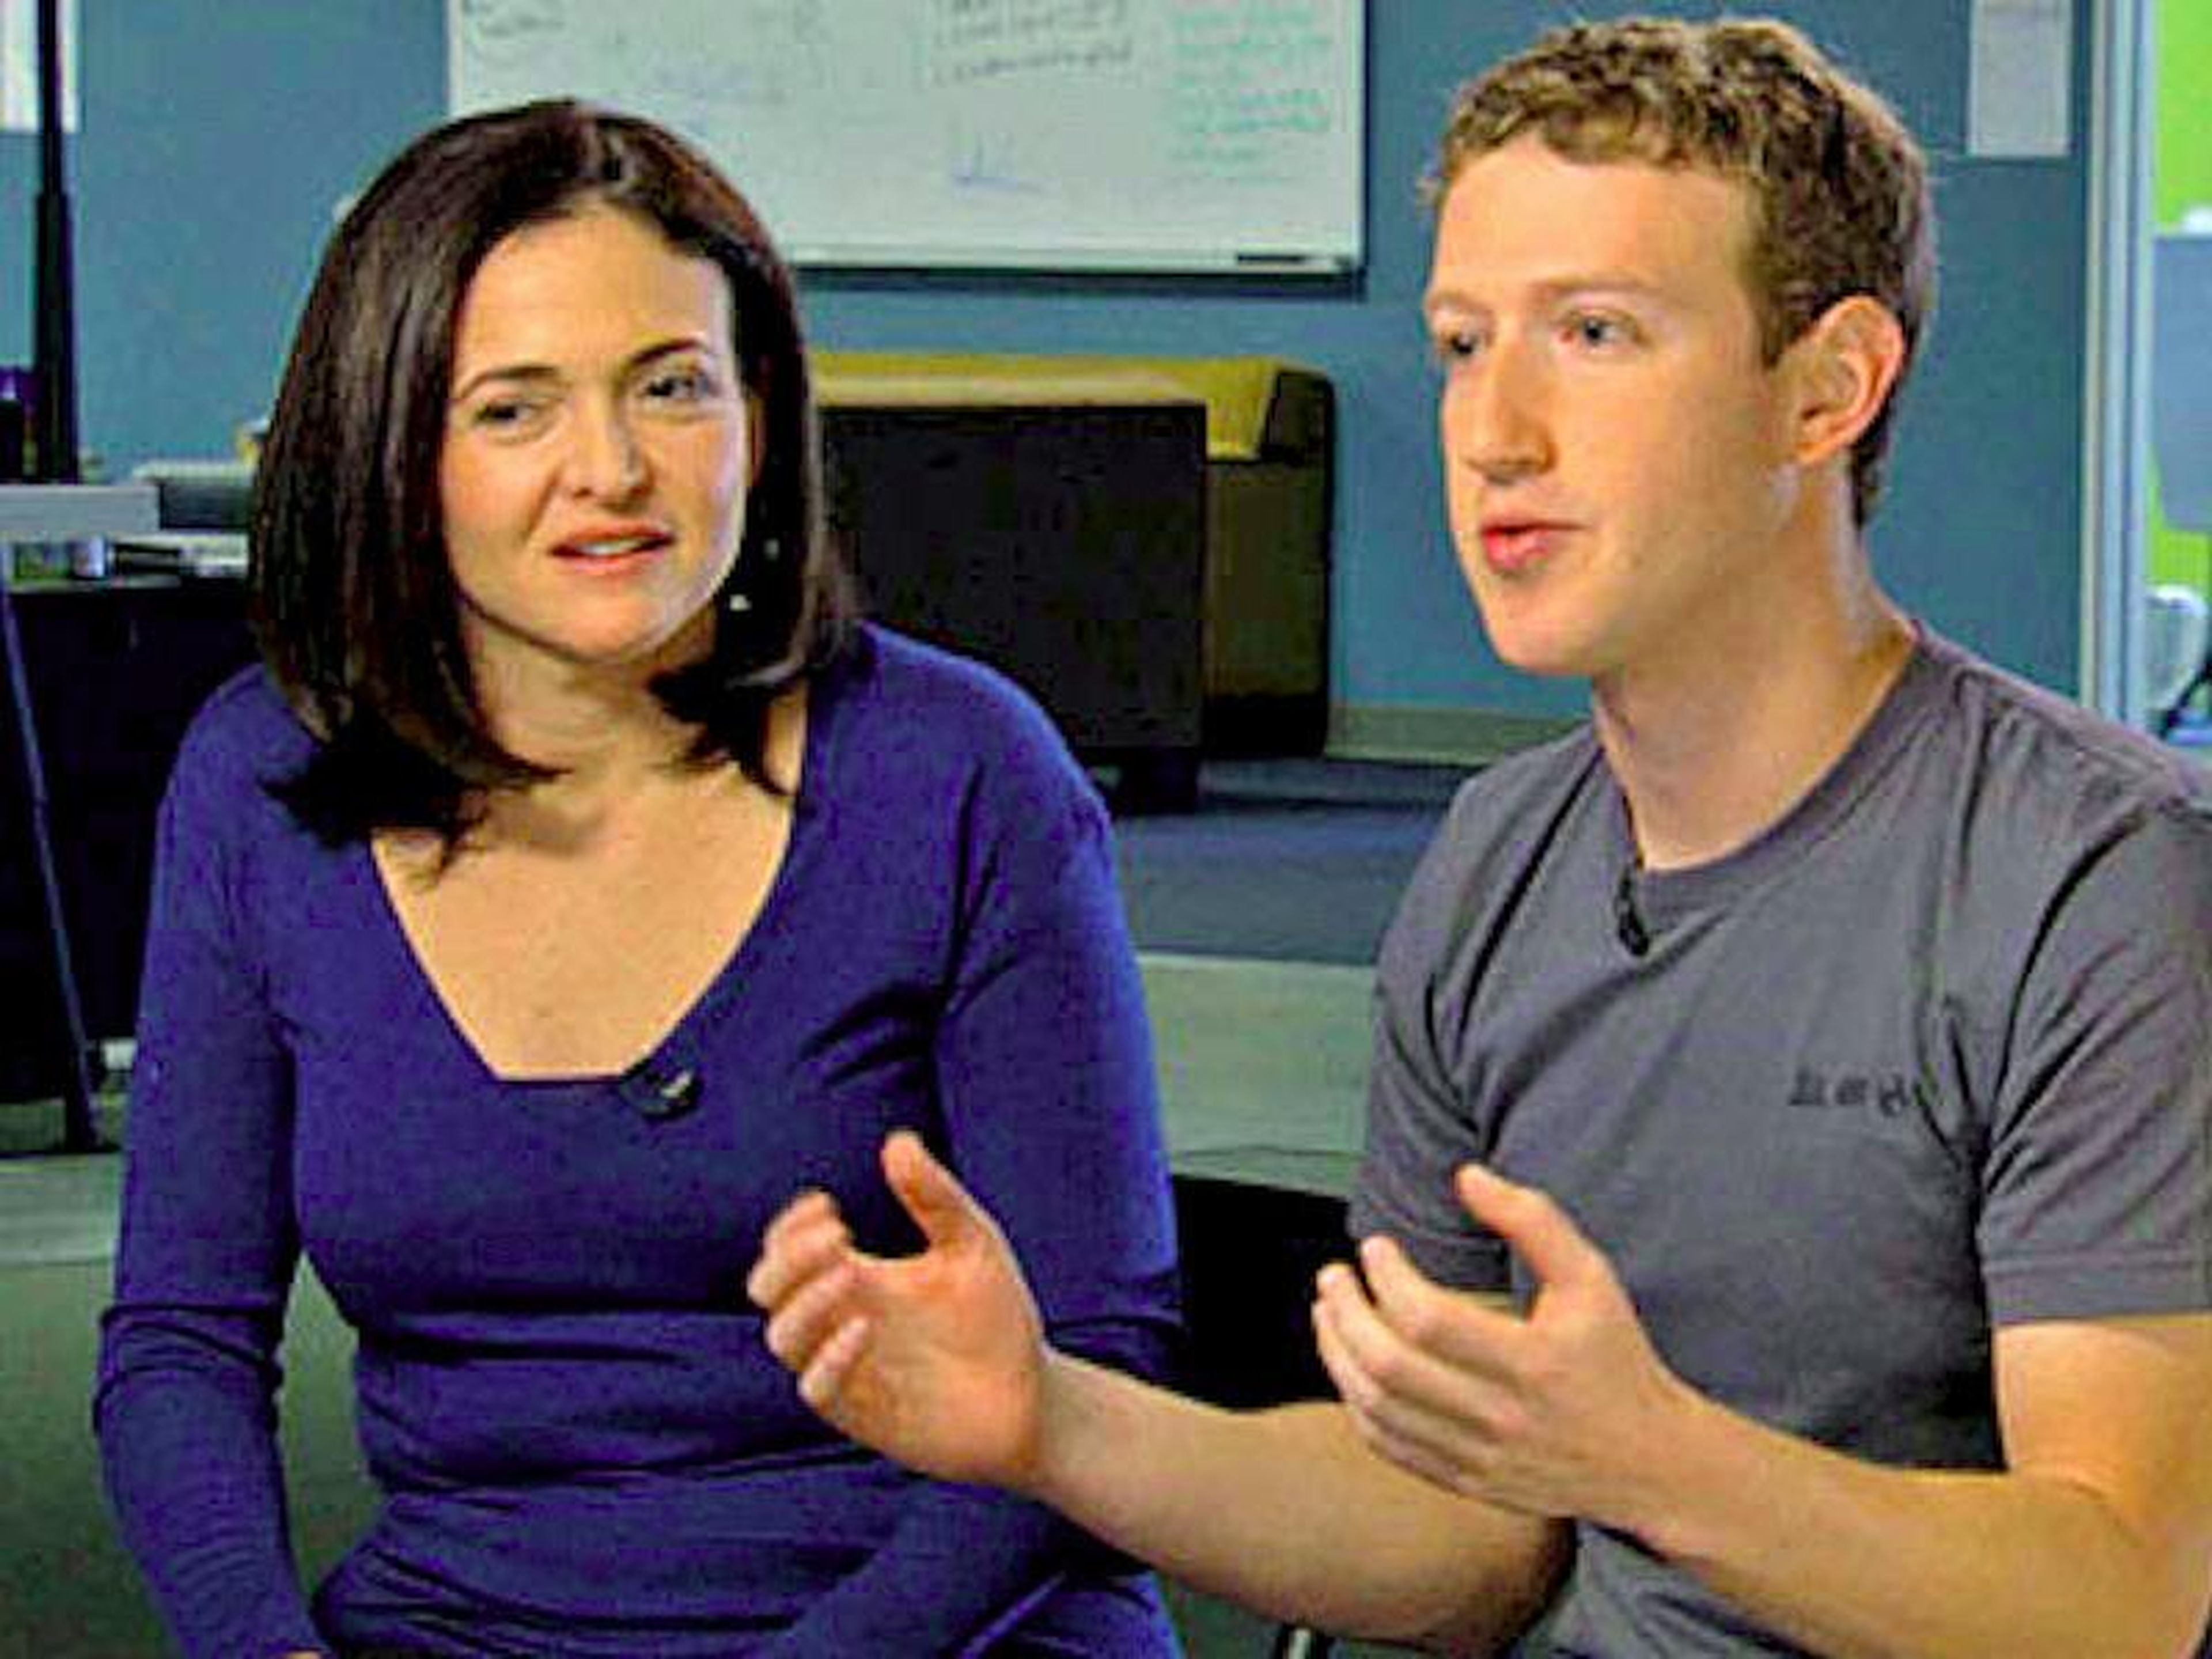 Sandberg (left) and Zuckerberg